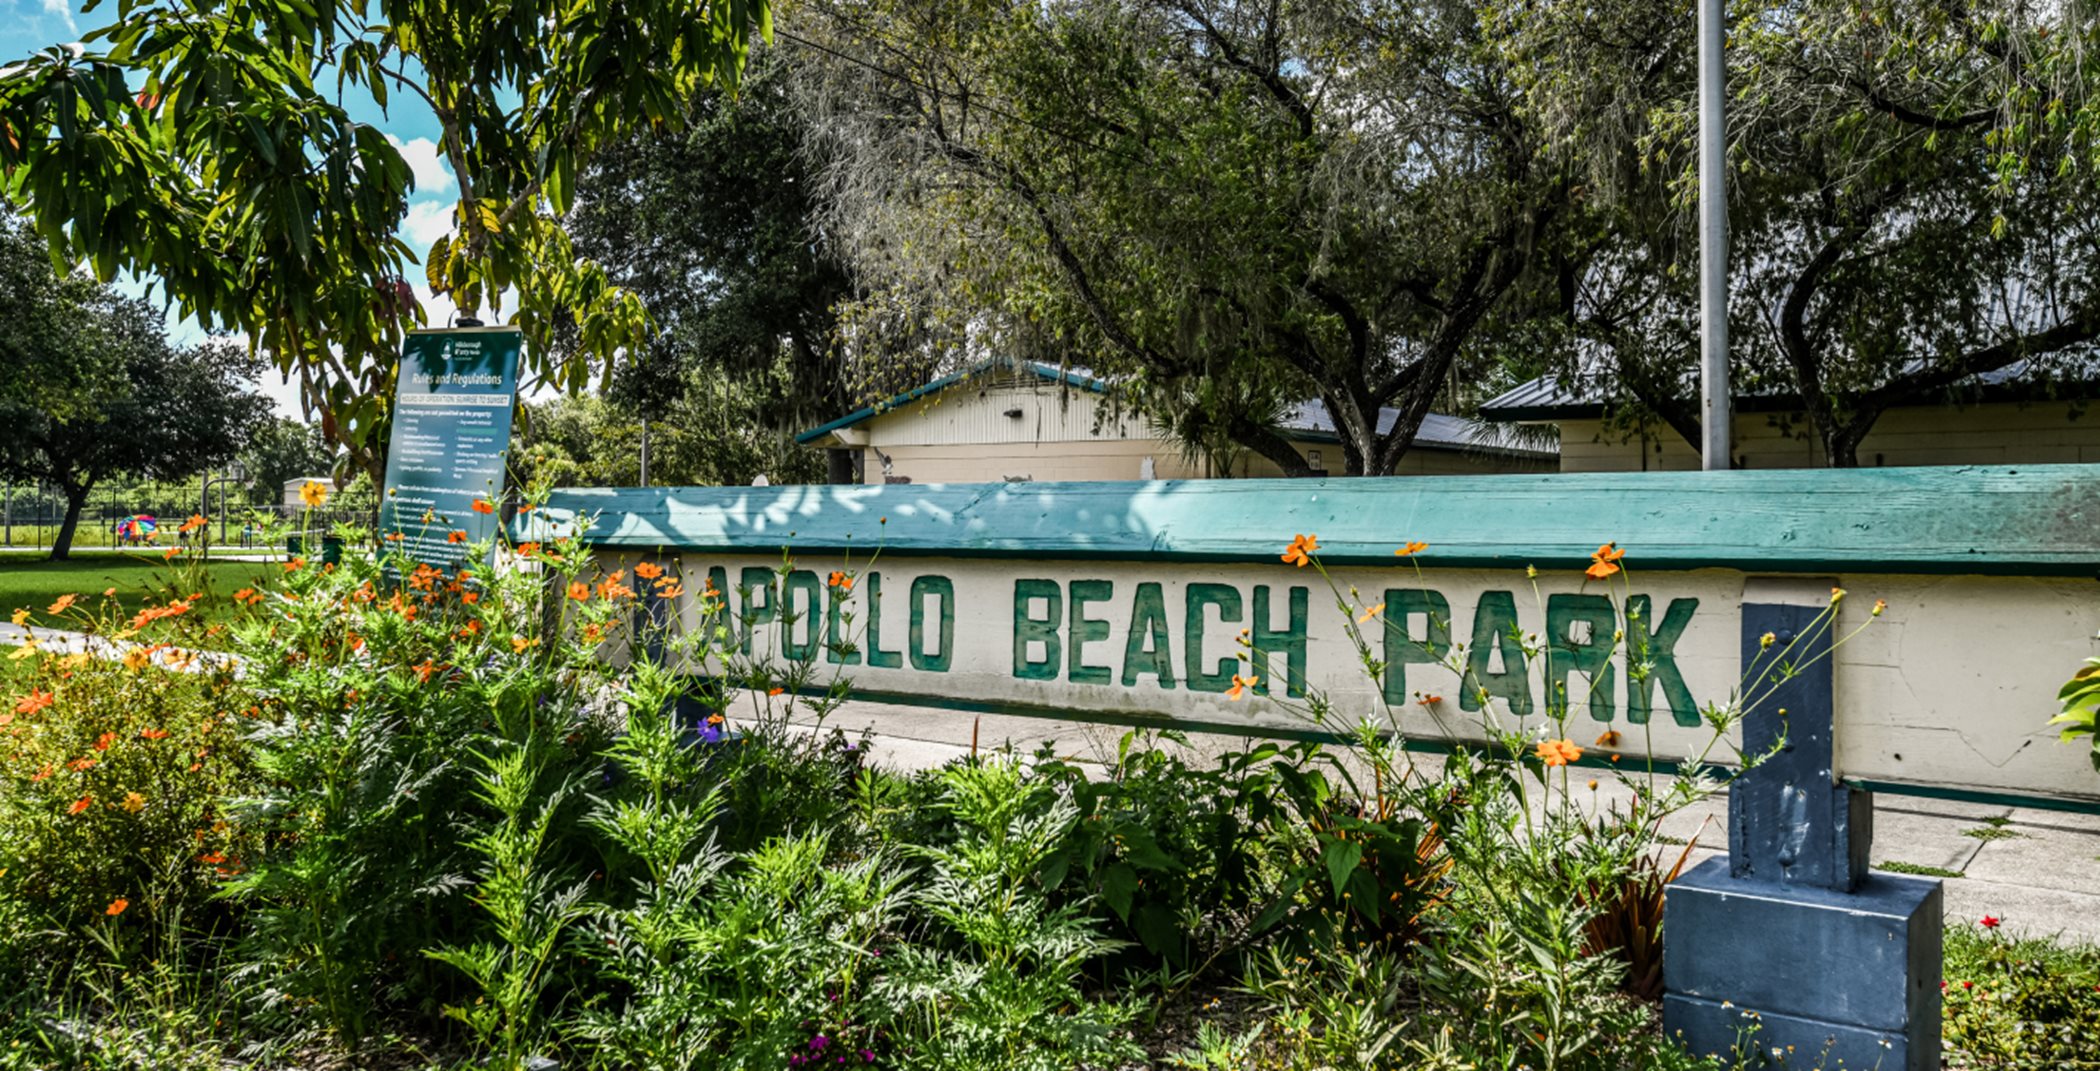 Apollo Beach Park entry monument